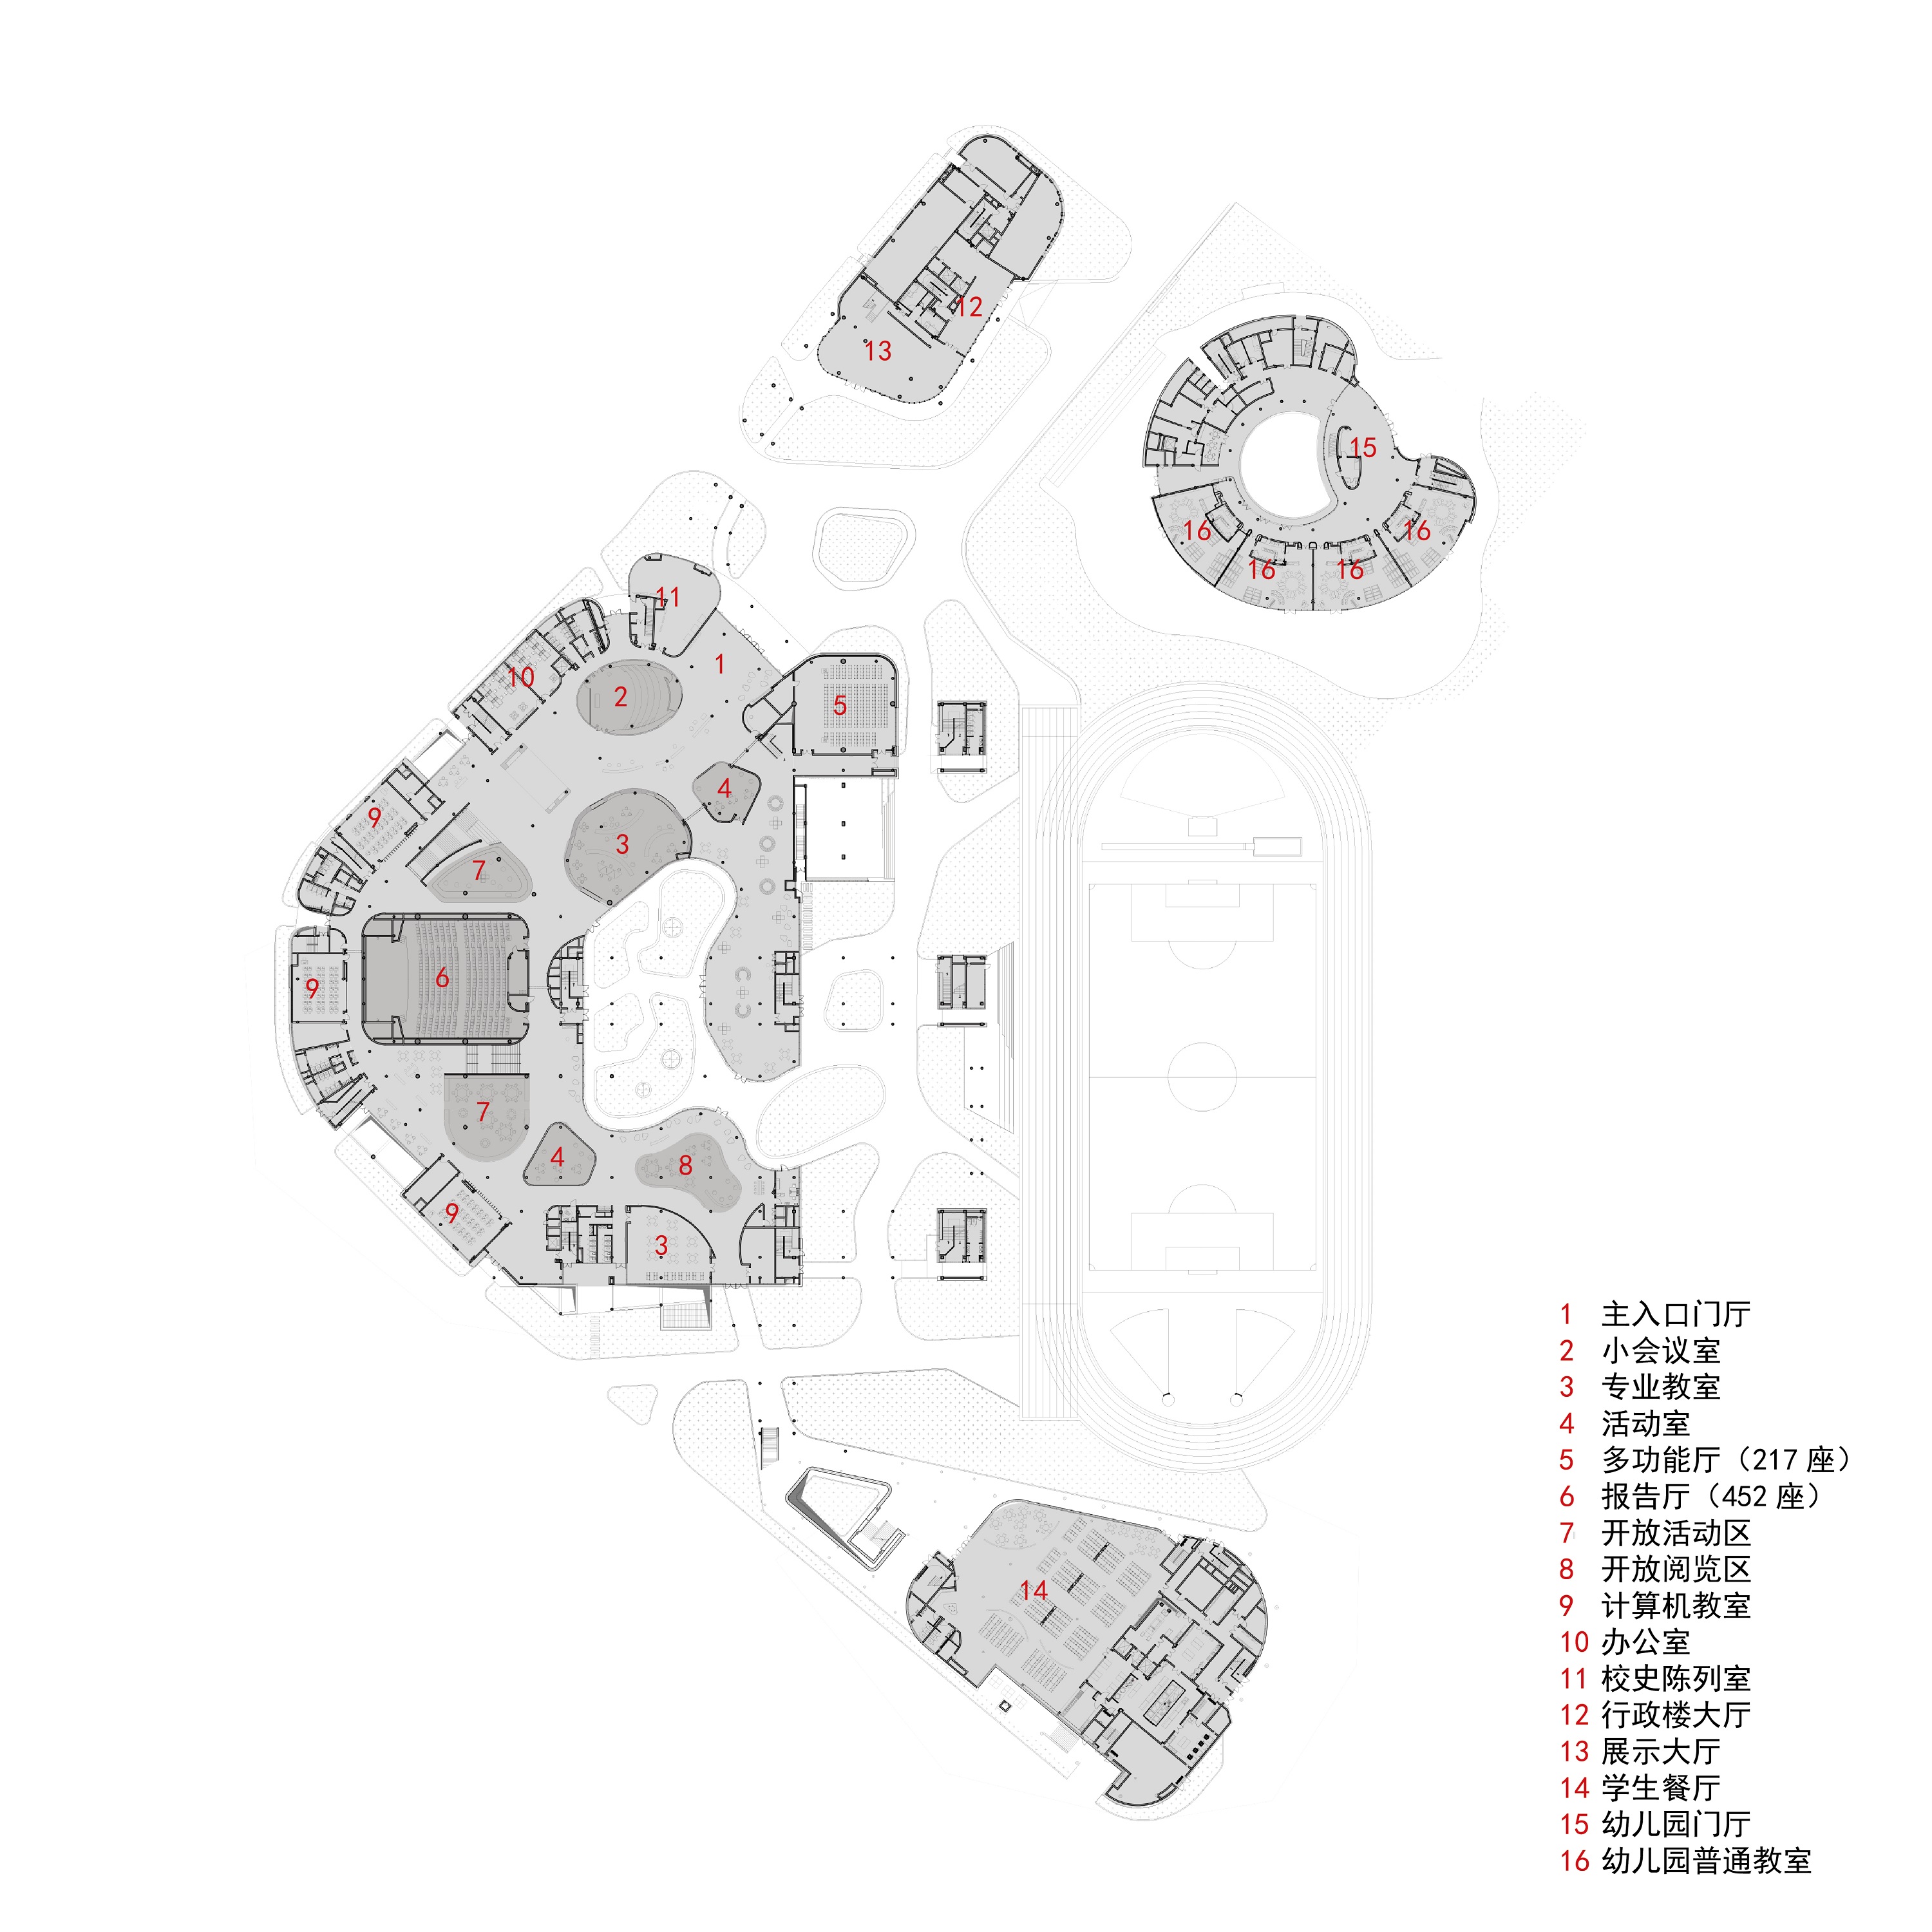 m3 一层平面图 ©浙江大学建筑设计研究院.jpg